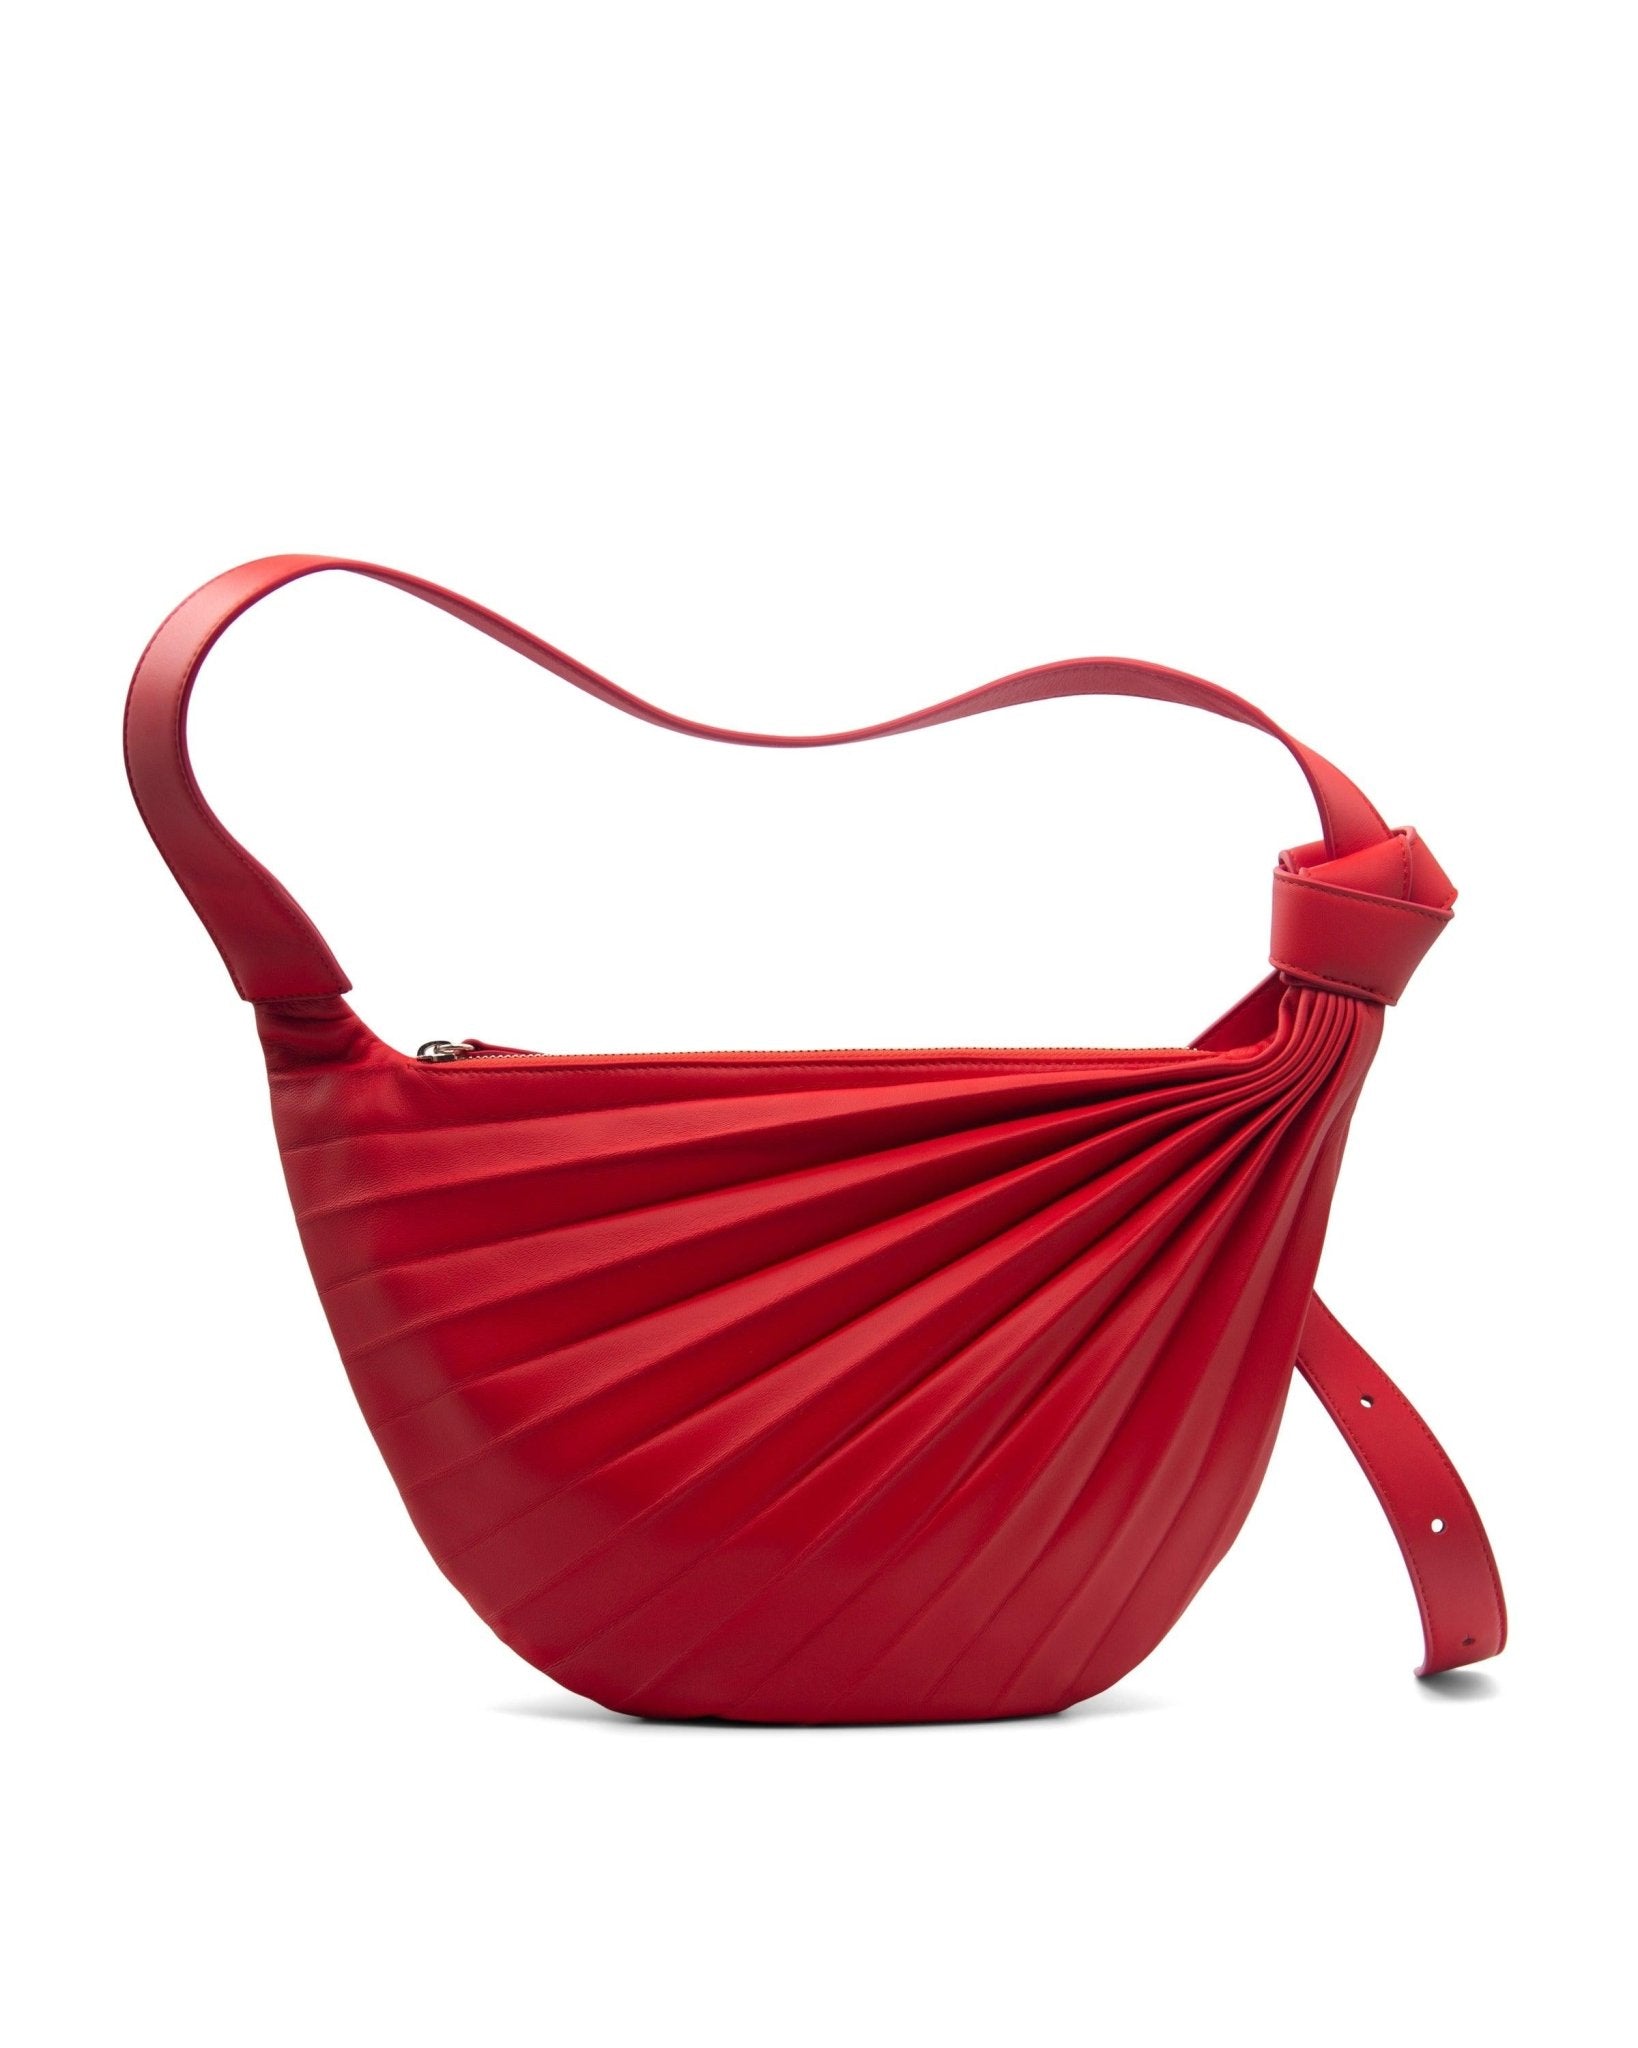 Sabrina Zeng's Chiaroscuro Hammock Sling Bag in Coral Red - Stylish Red Crossbody Bag